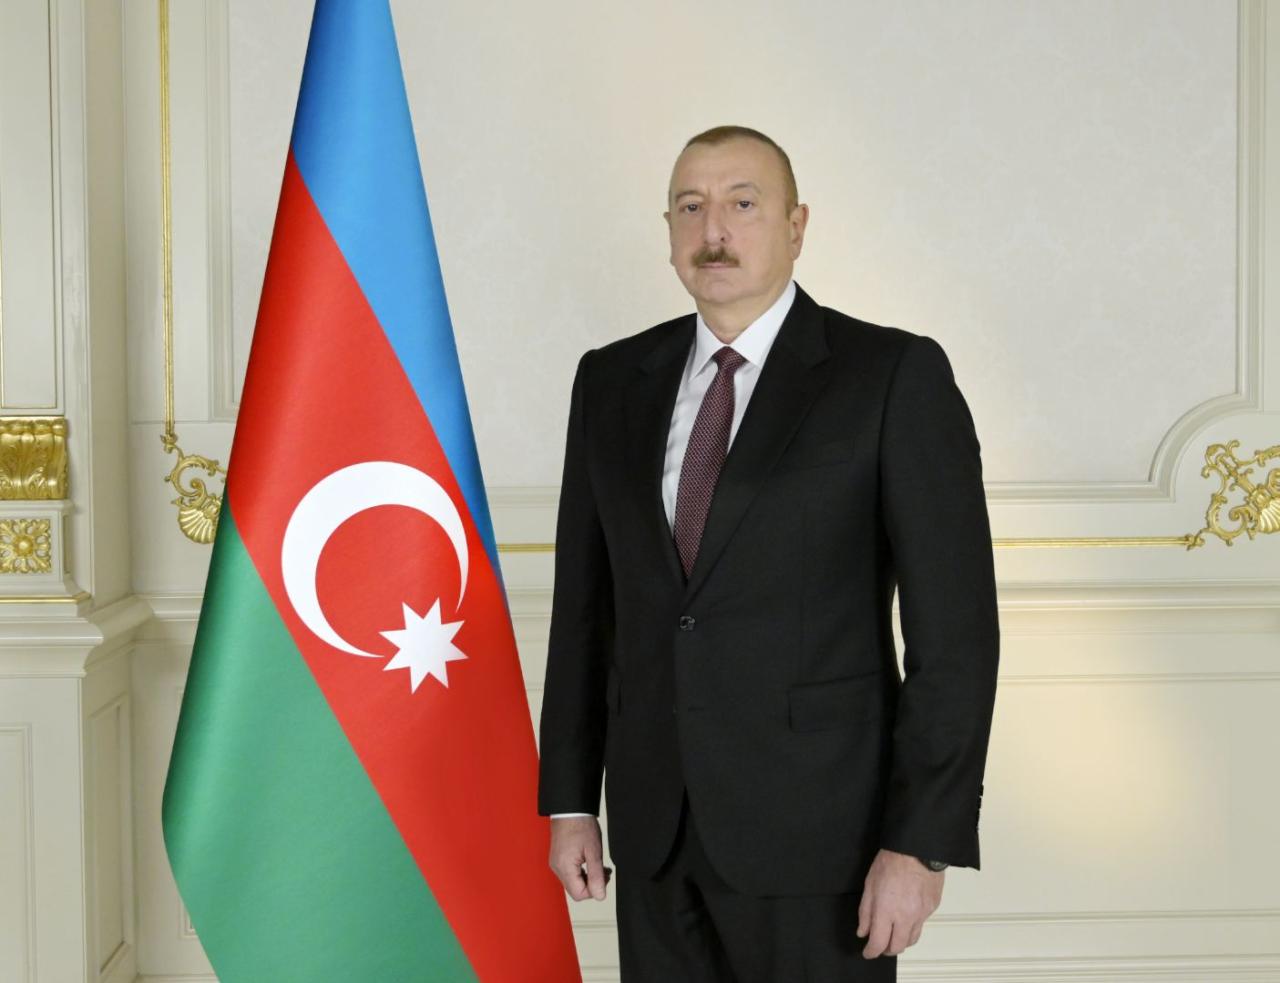 President Aliyev receives birthday congratulations from world leaders